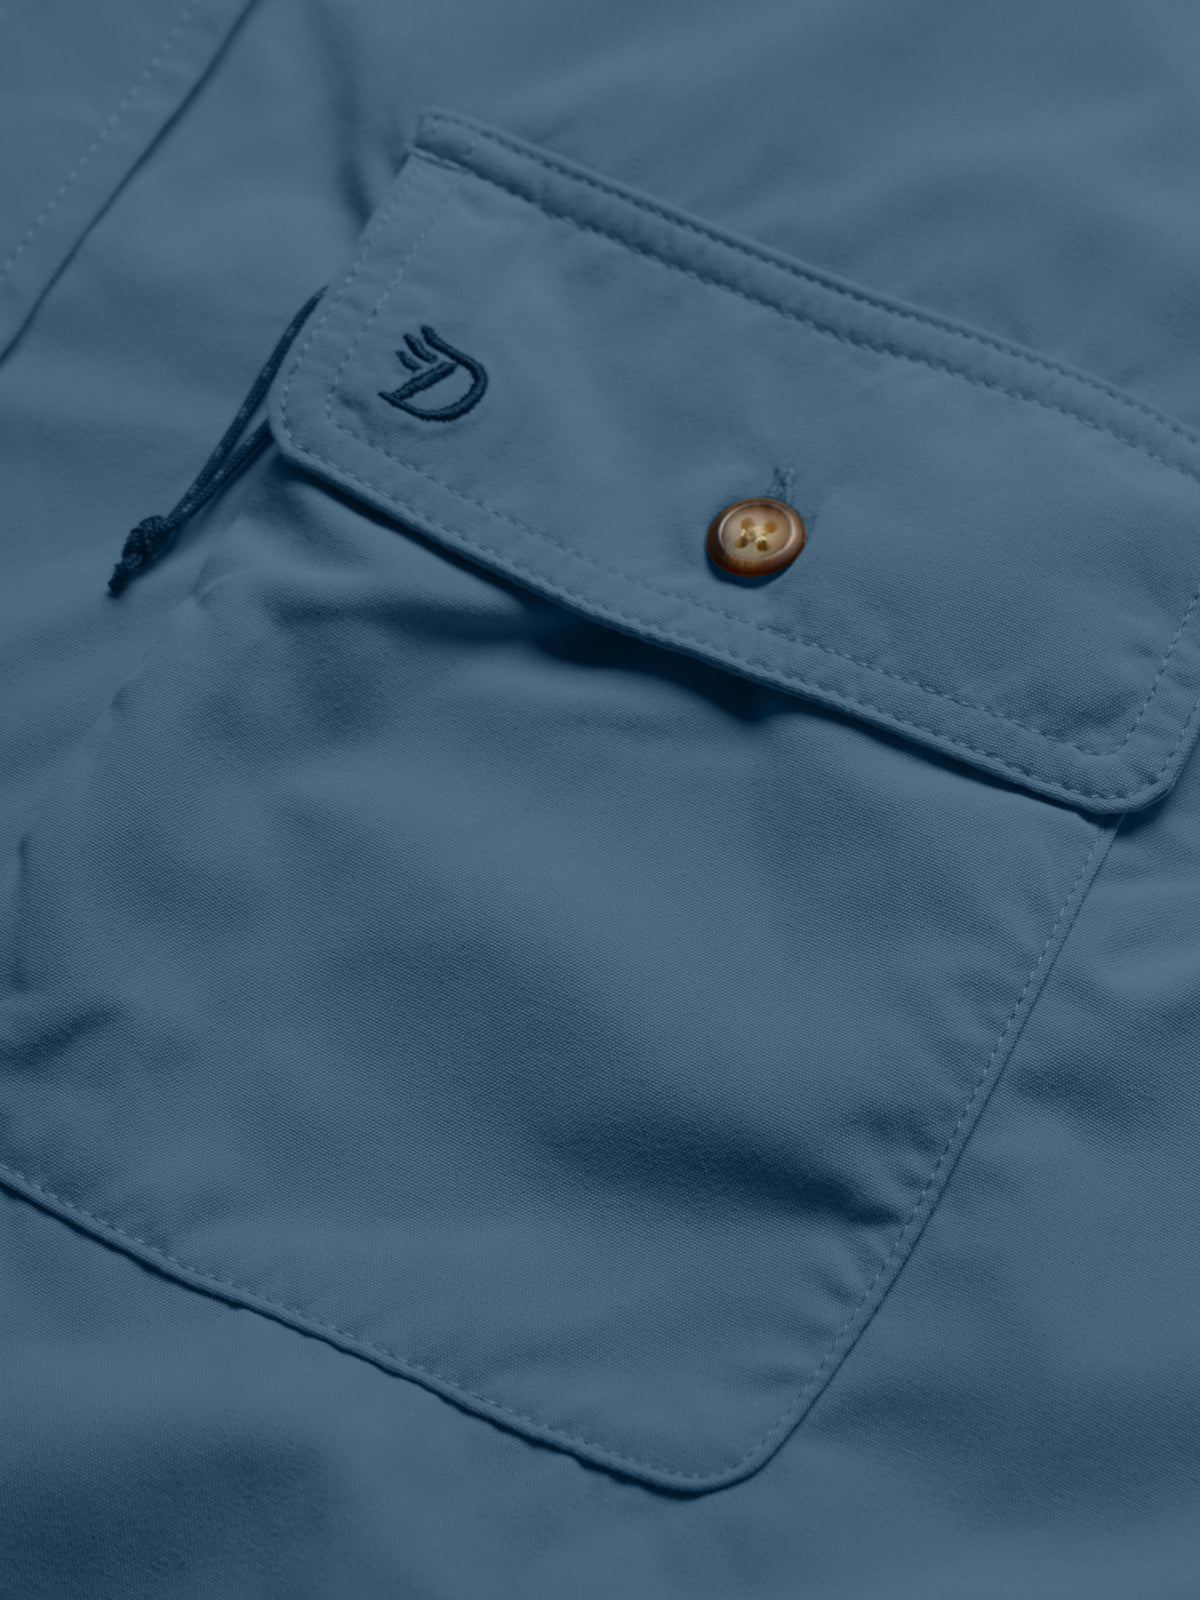 Lightweight Hunting Shirt Short Sleeve - Channel Blue